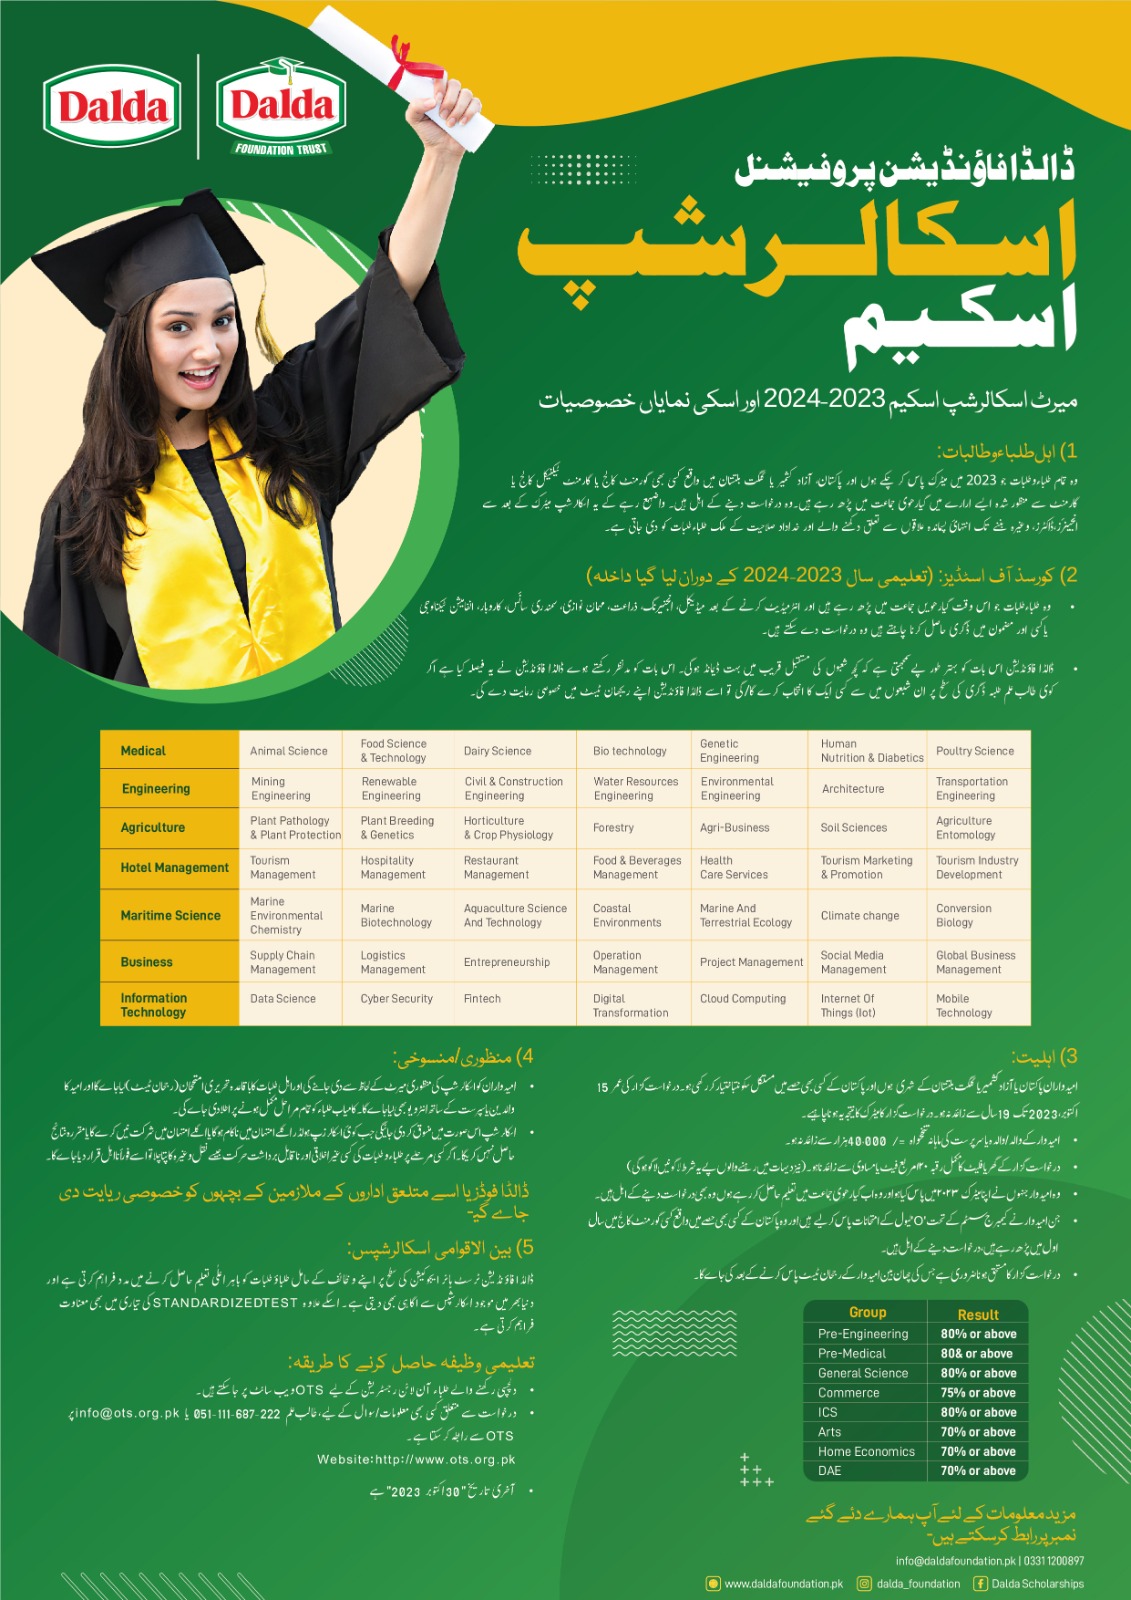 Dalda scholarship program 2023-24 urdu